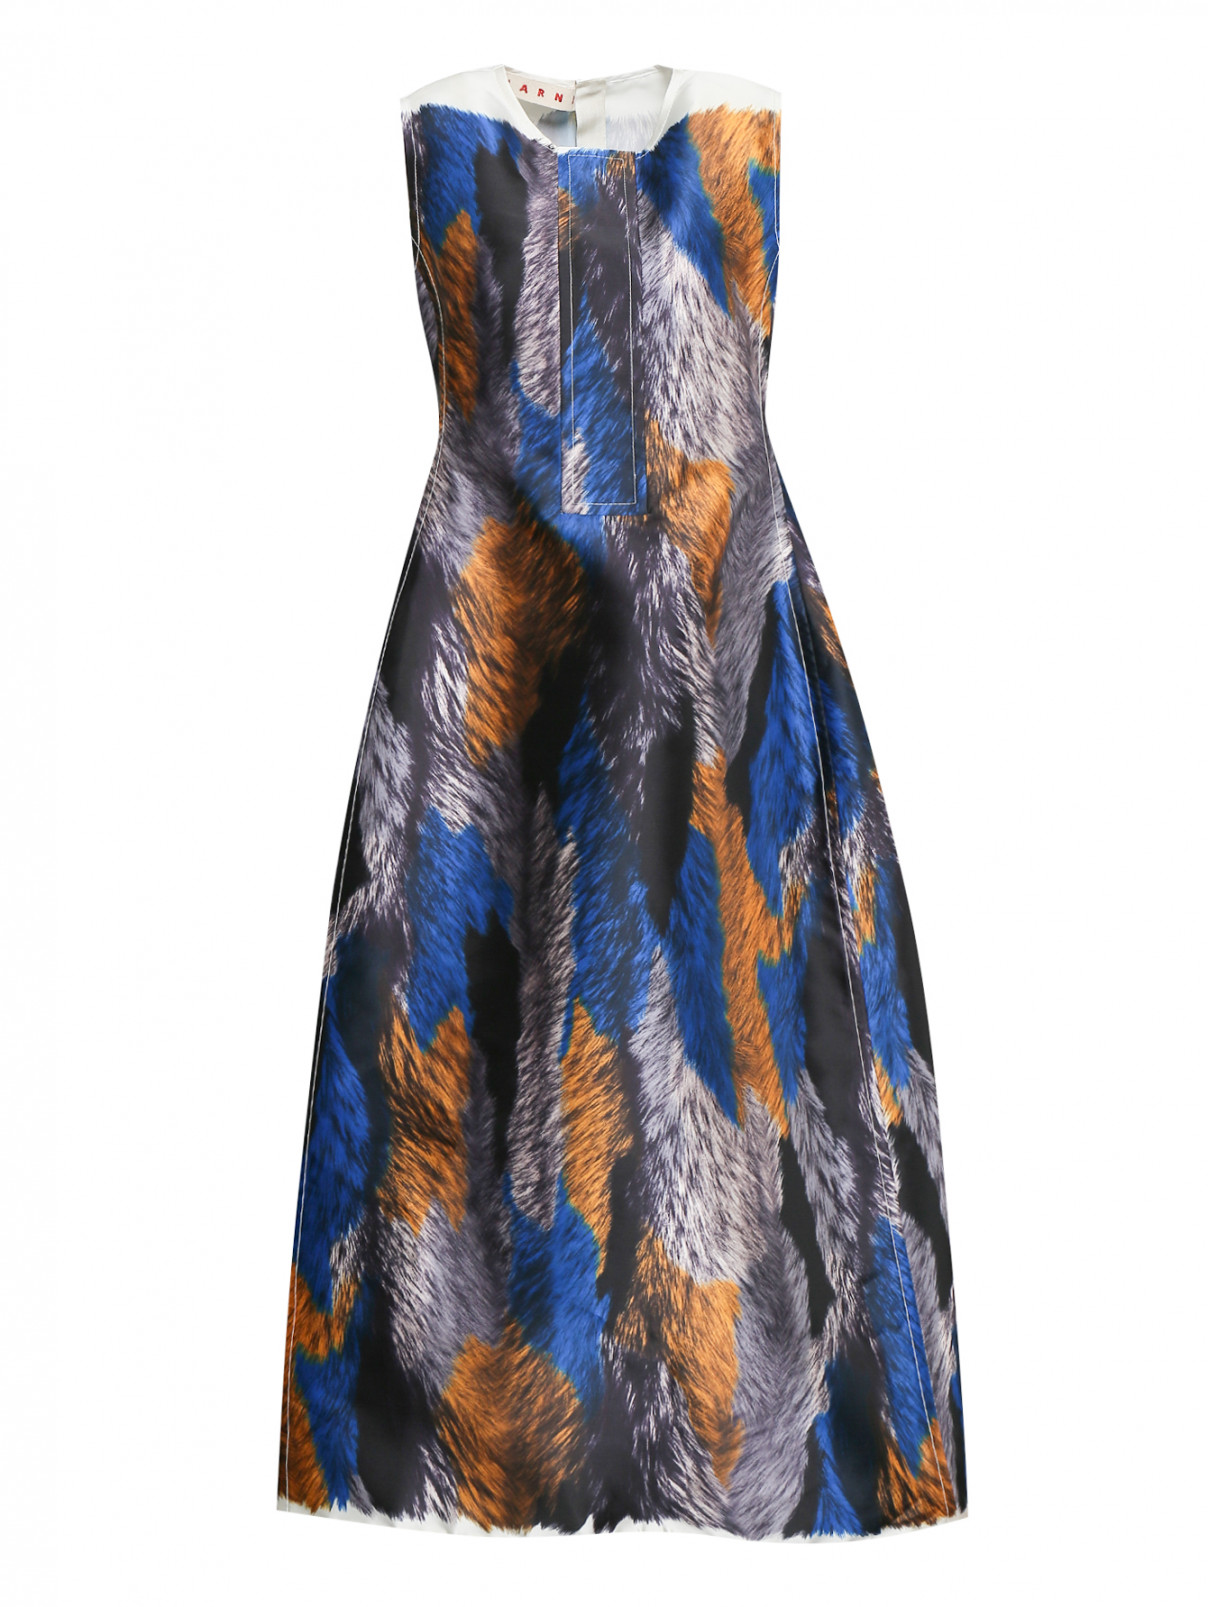 Платье-миди с узором Marni  –  Общий вид  – Цвет:  Узор